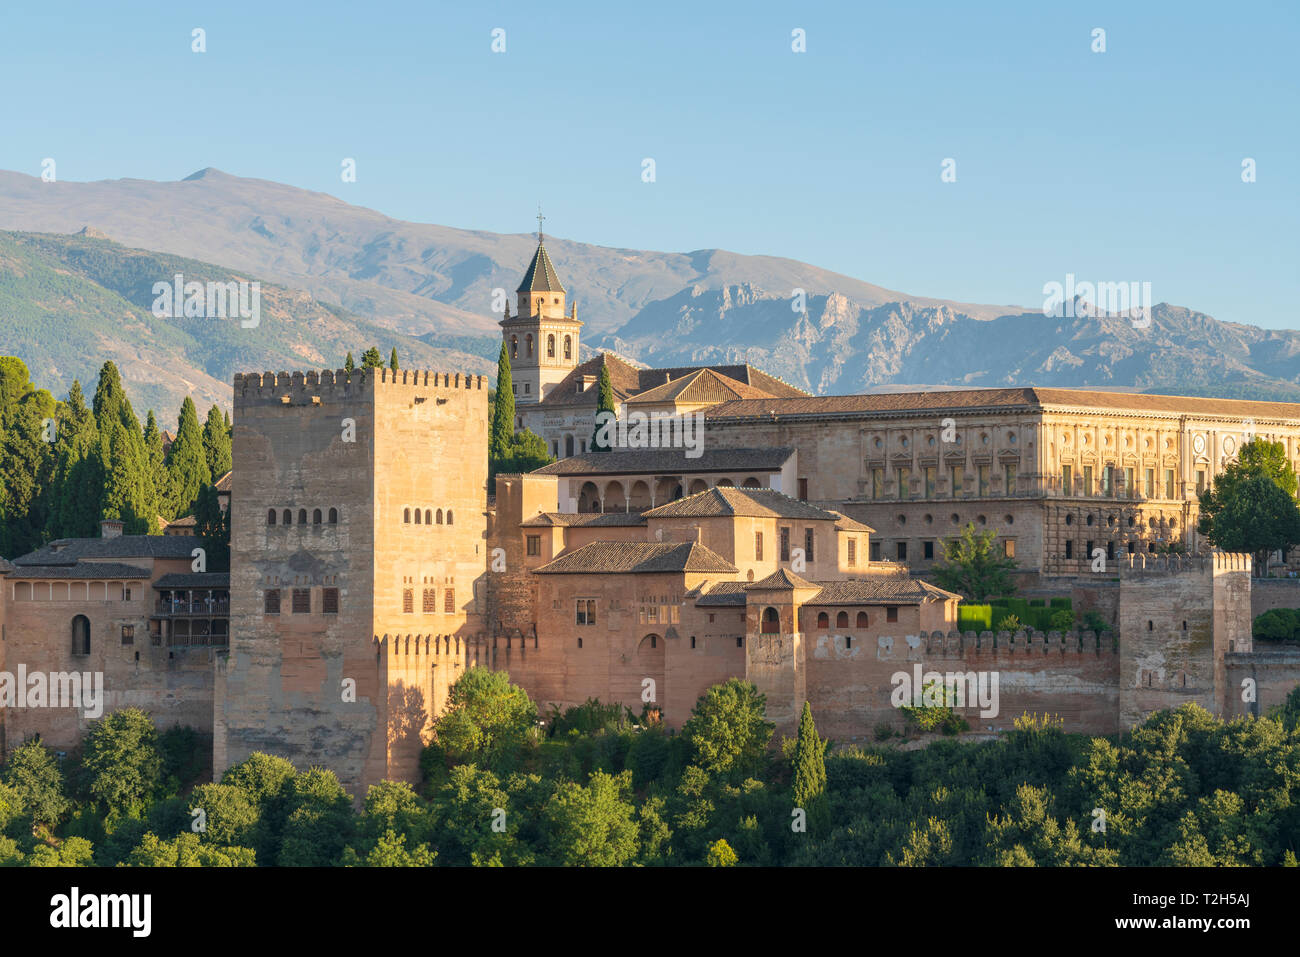 Alhambra palace in Granada, Spain, Europe Stock Photo